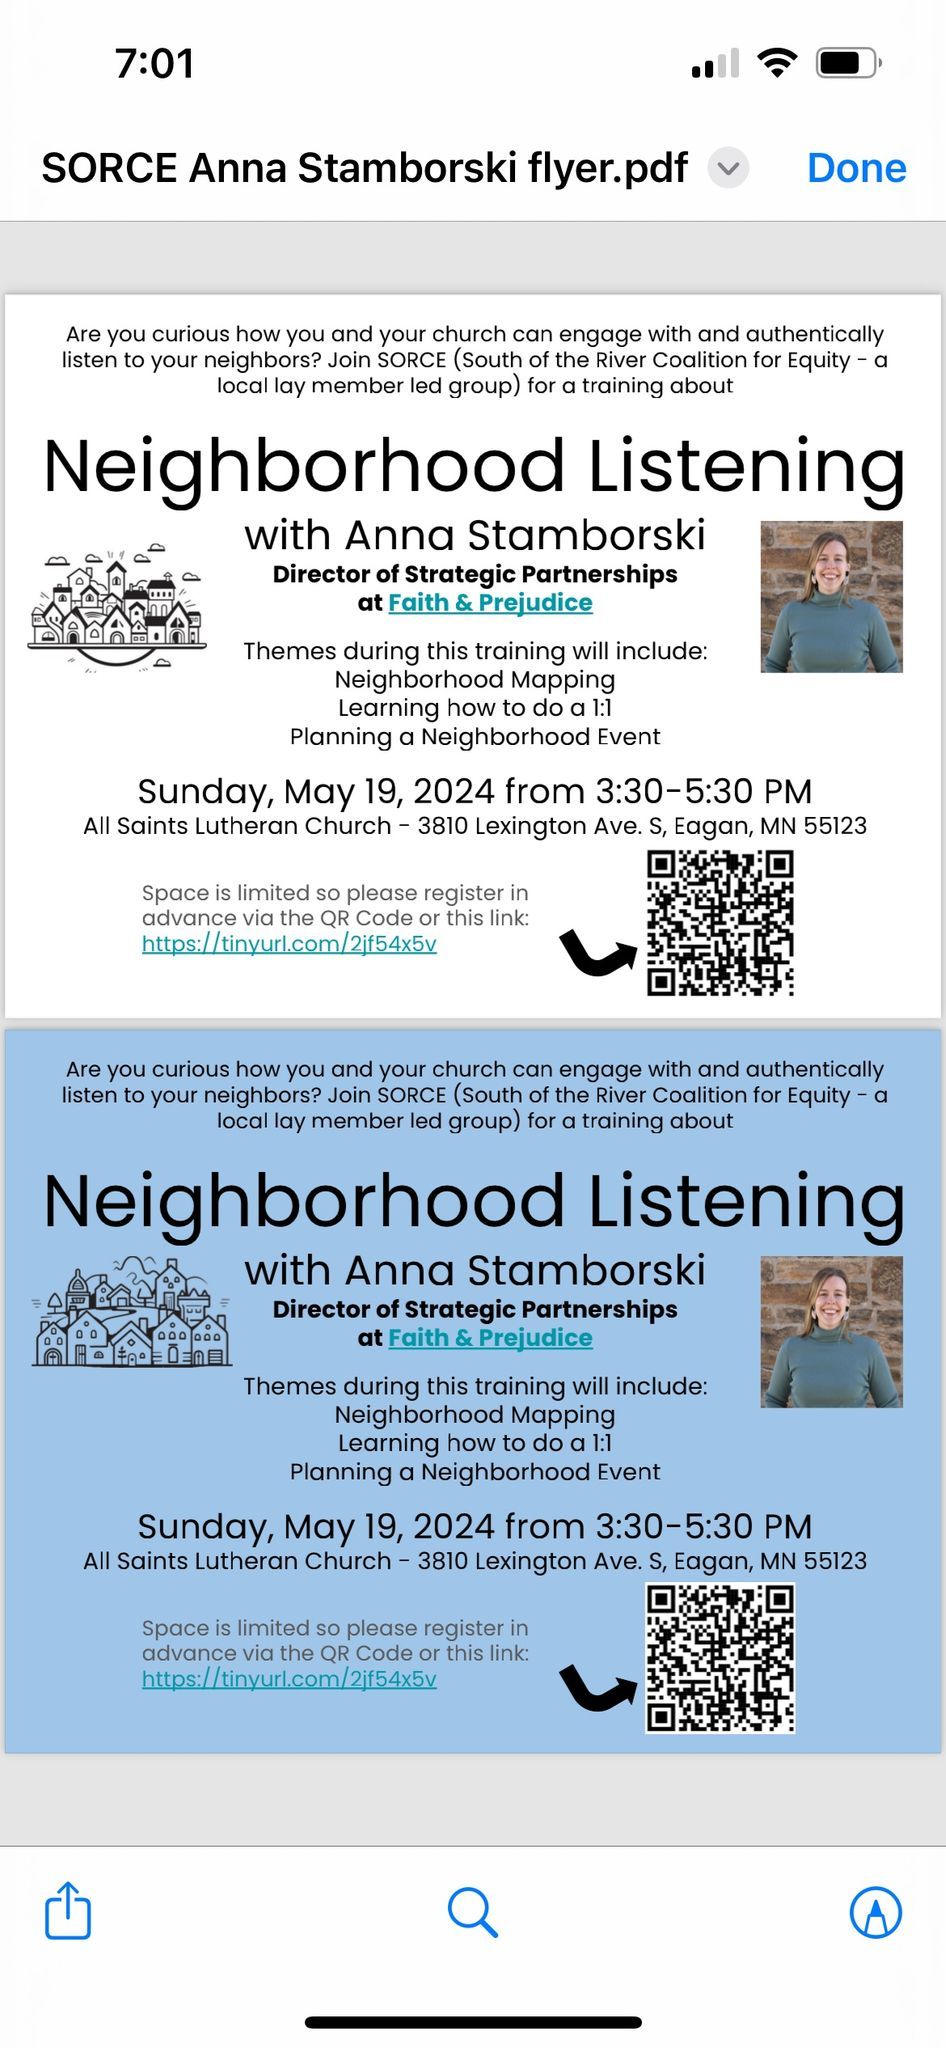 Neighborhood Listening with Anna Stamborski